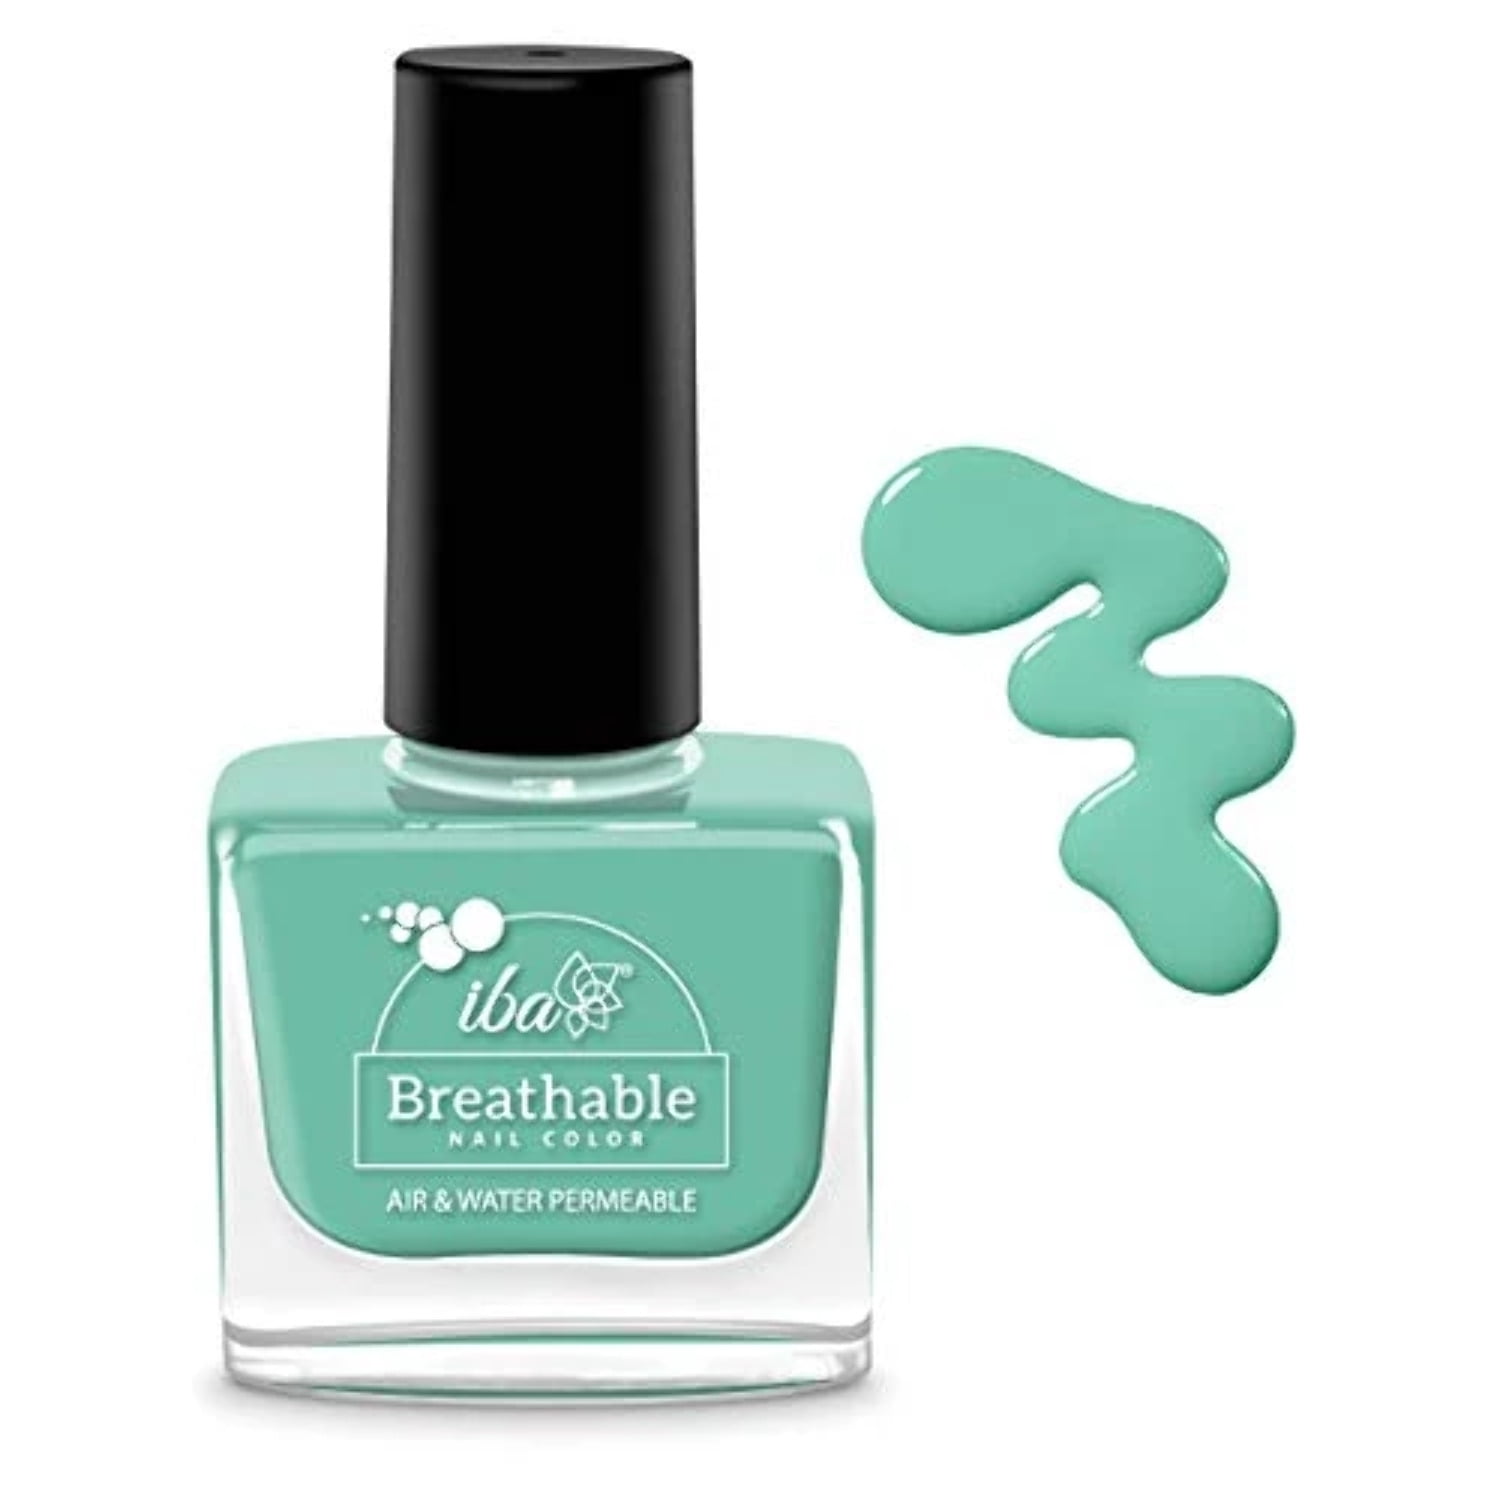 Iba Halal Care Breathable Nail Color, B19 Aqua Swirl, 9ml 